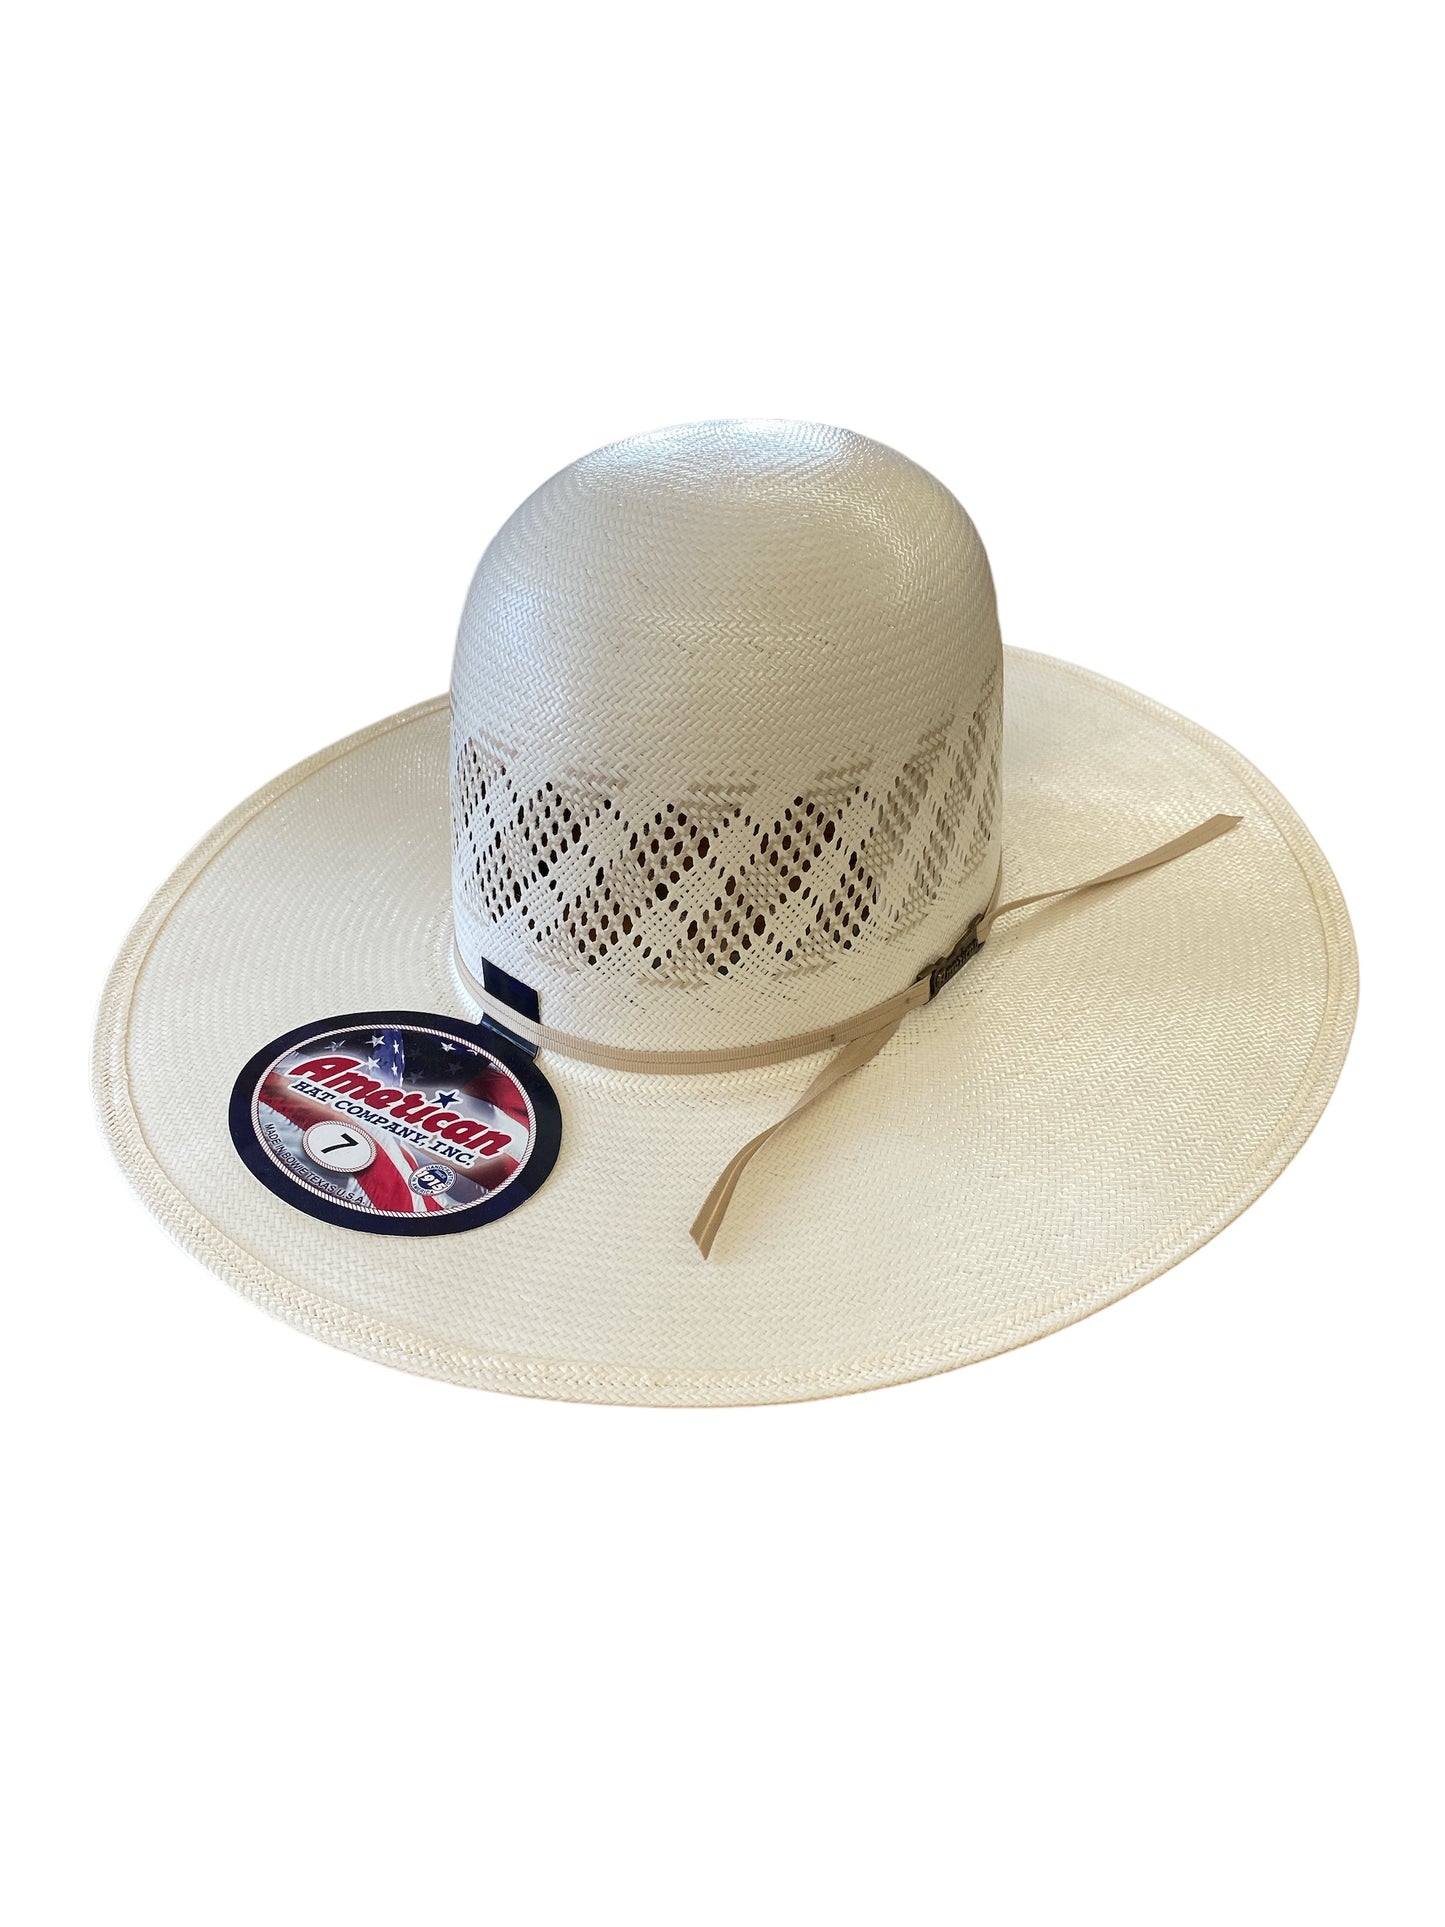 AMERICAN HAT STRAW #63002